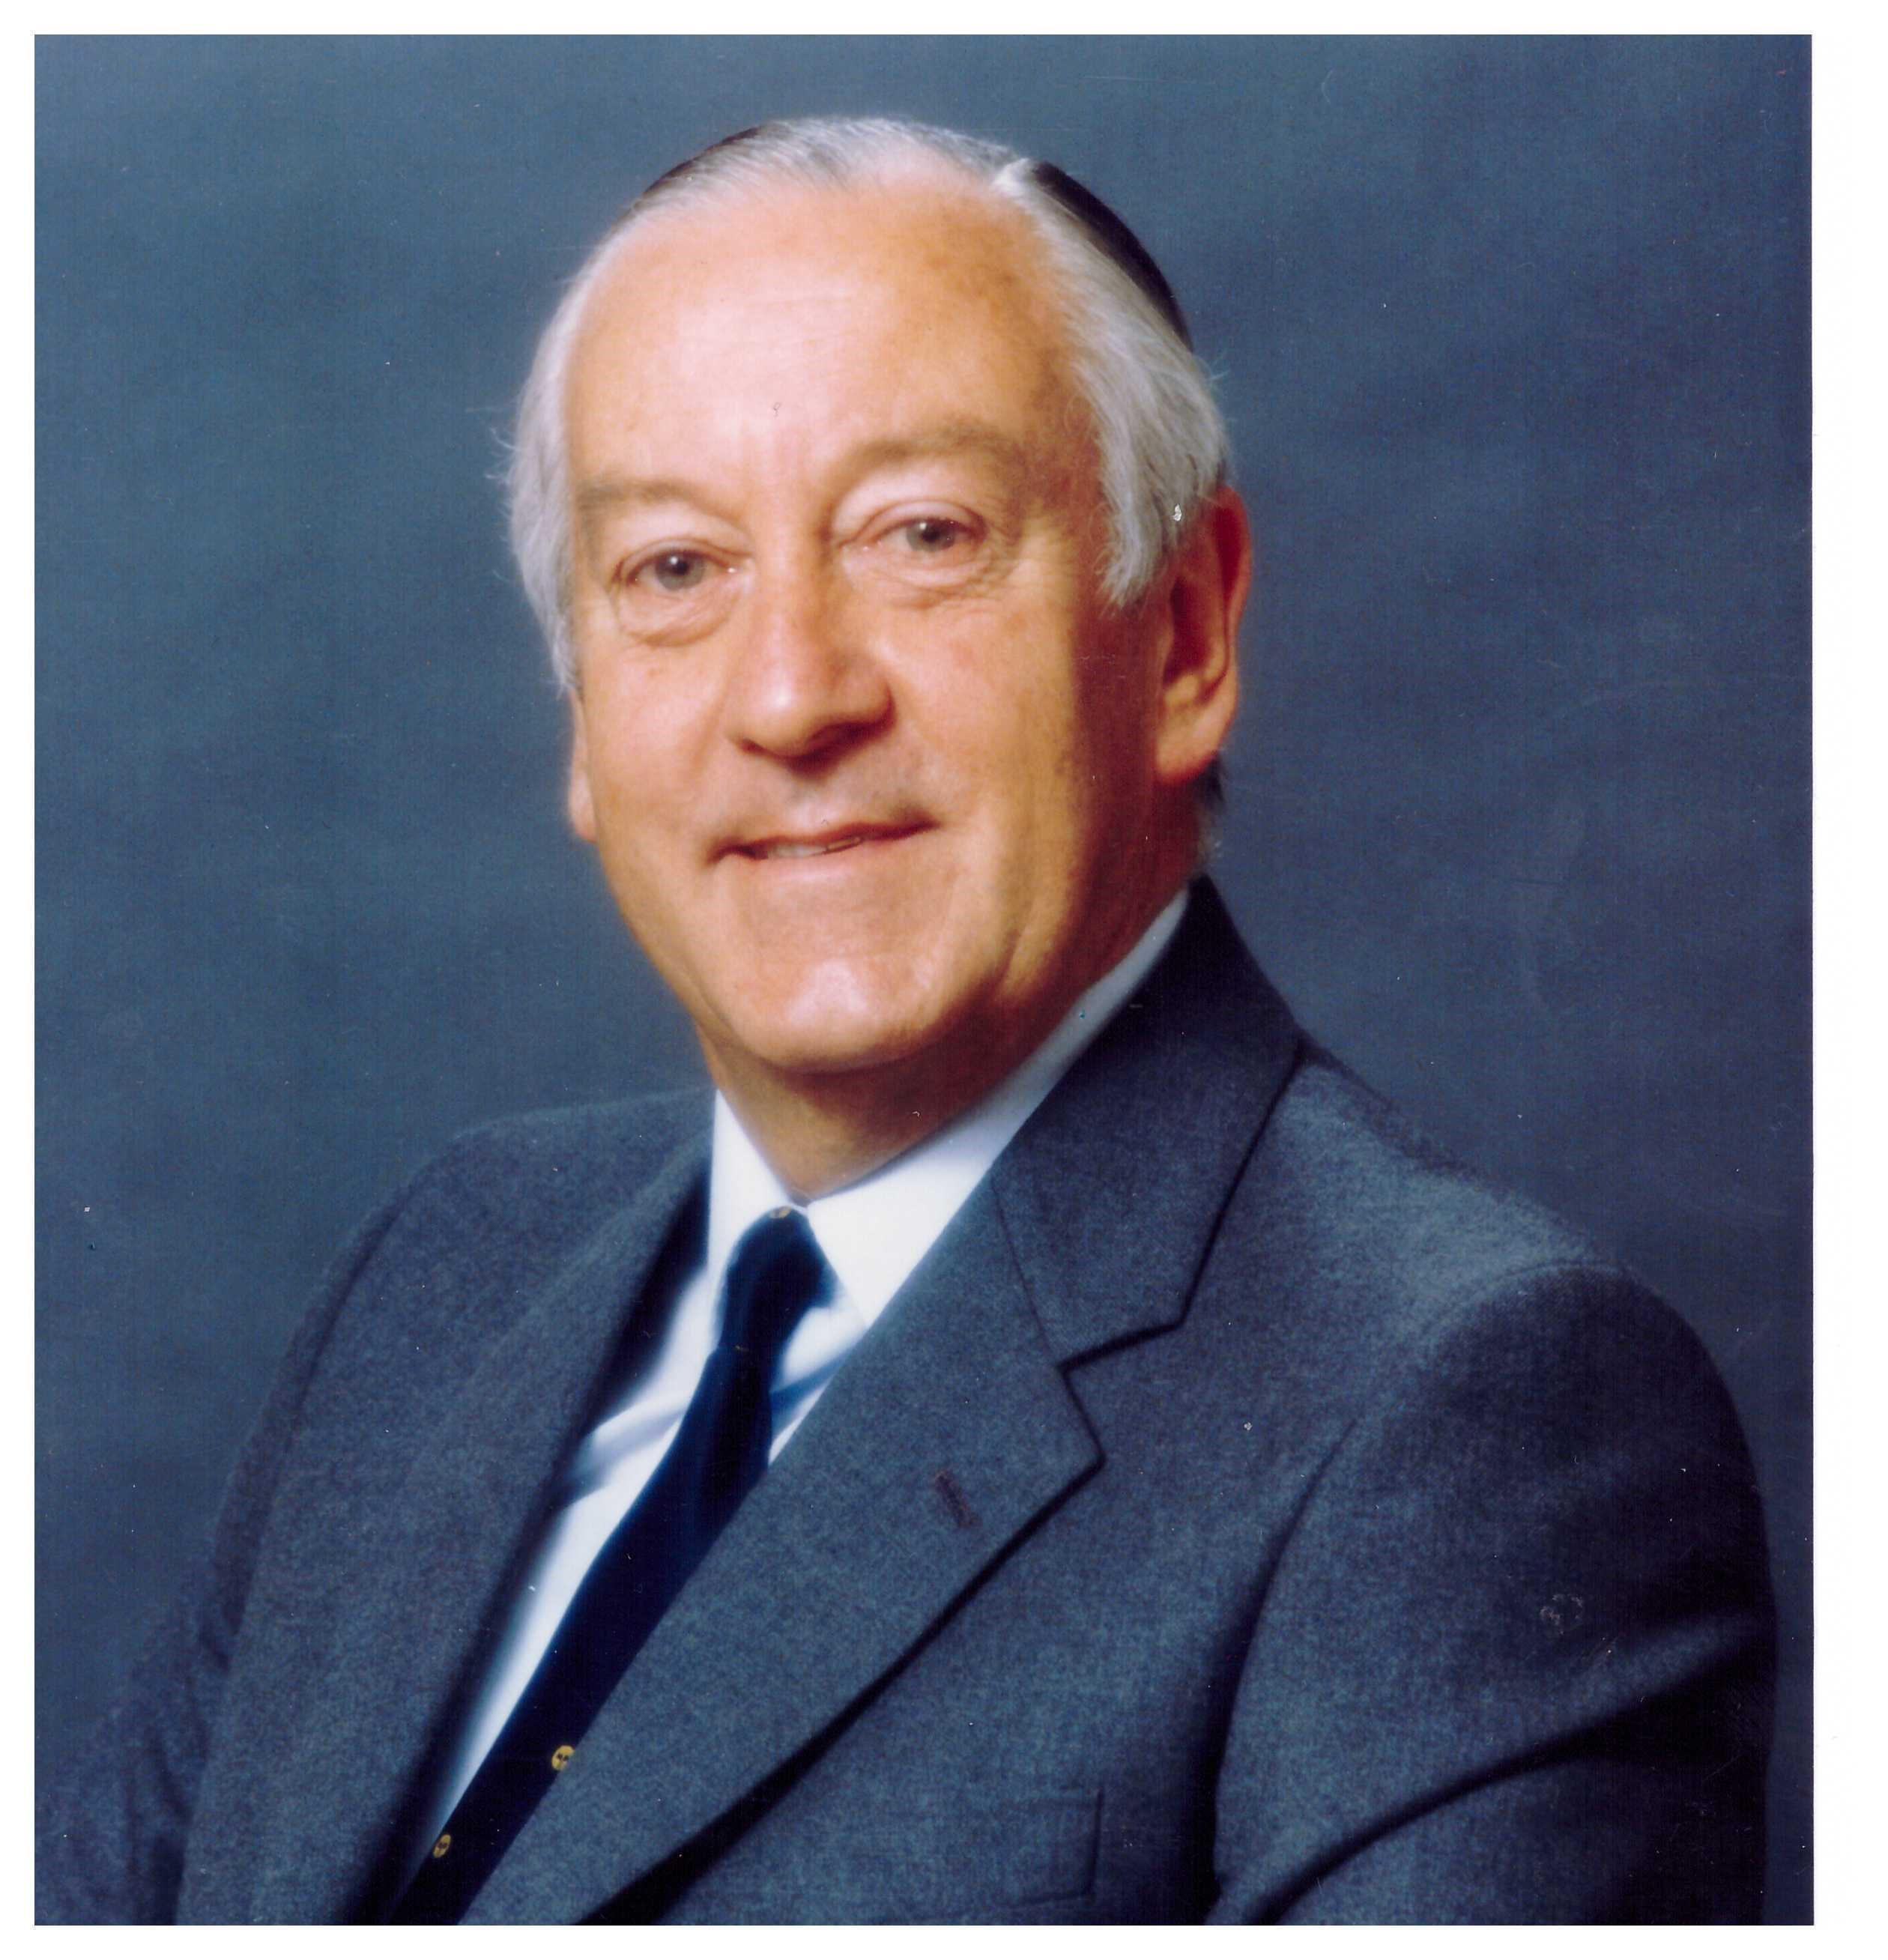 Roger Banks, Telecom's Director of Business Development, 1986